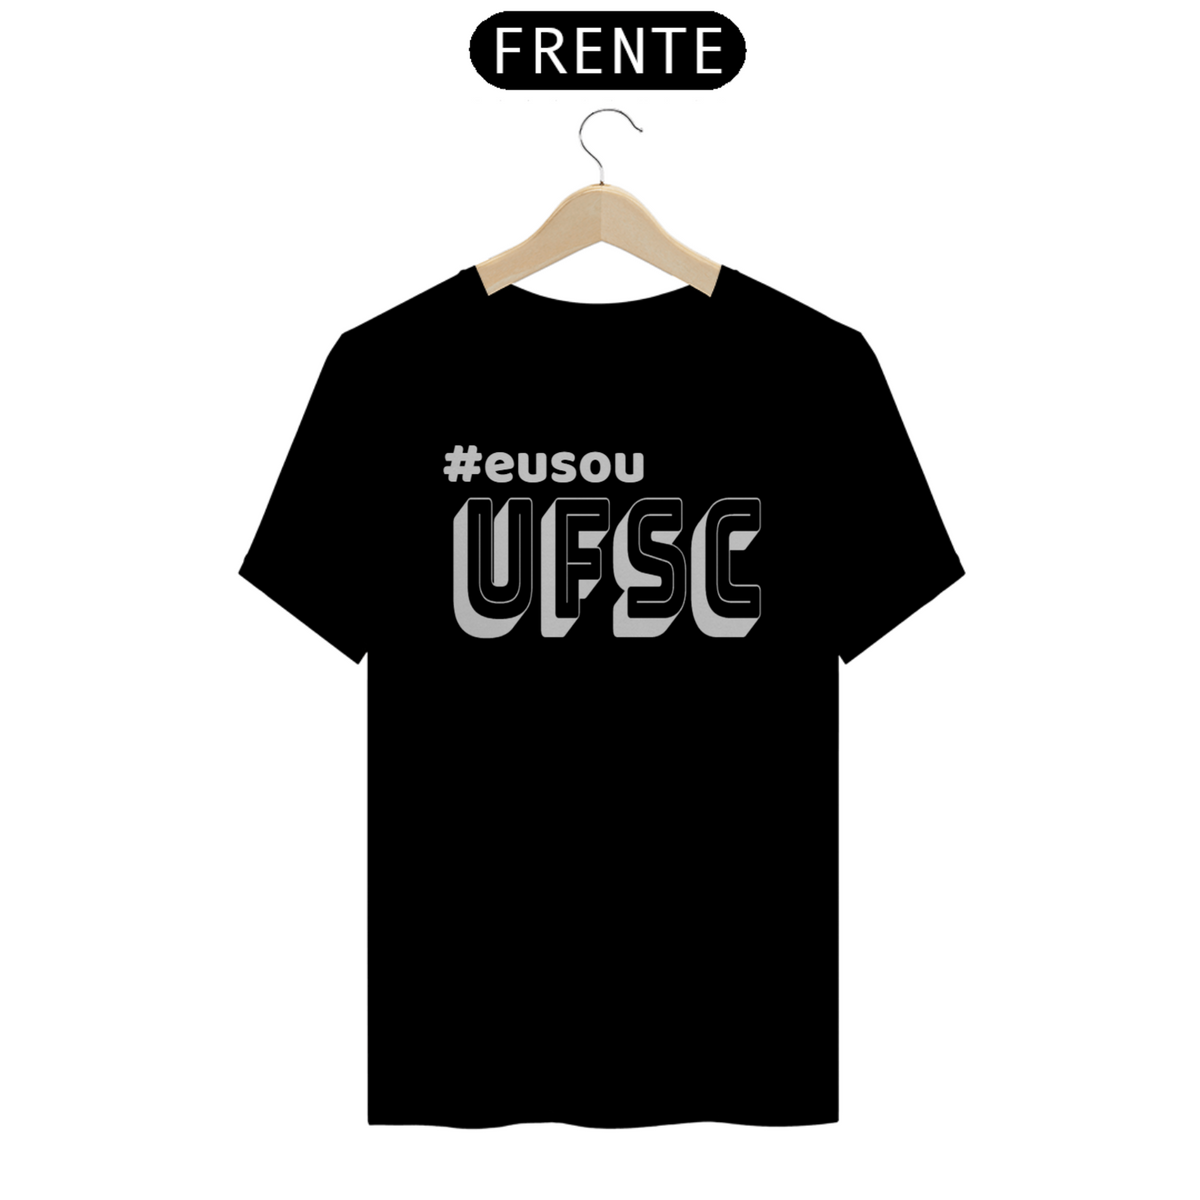 Nome do produto: Camiseta [UFF] {cores diversas} -frente - #eusouufsc